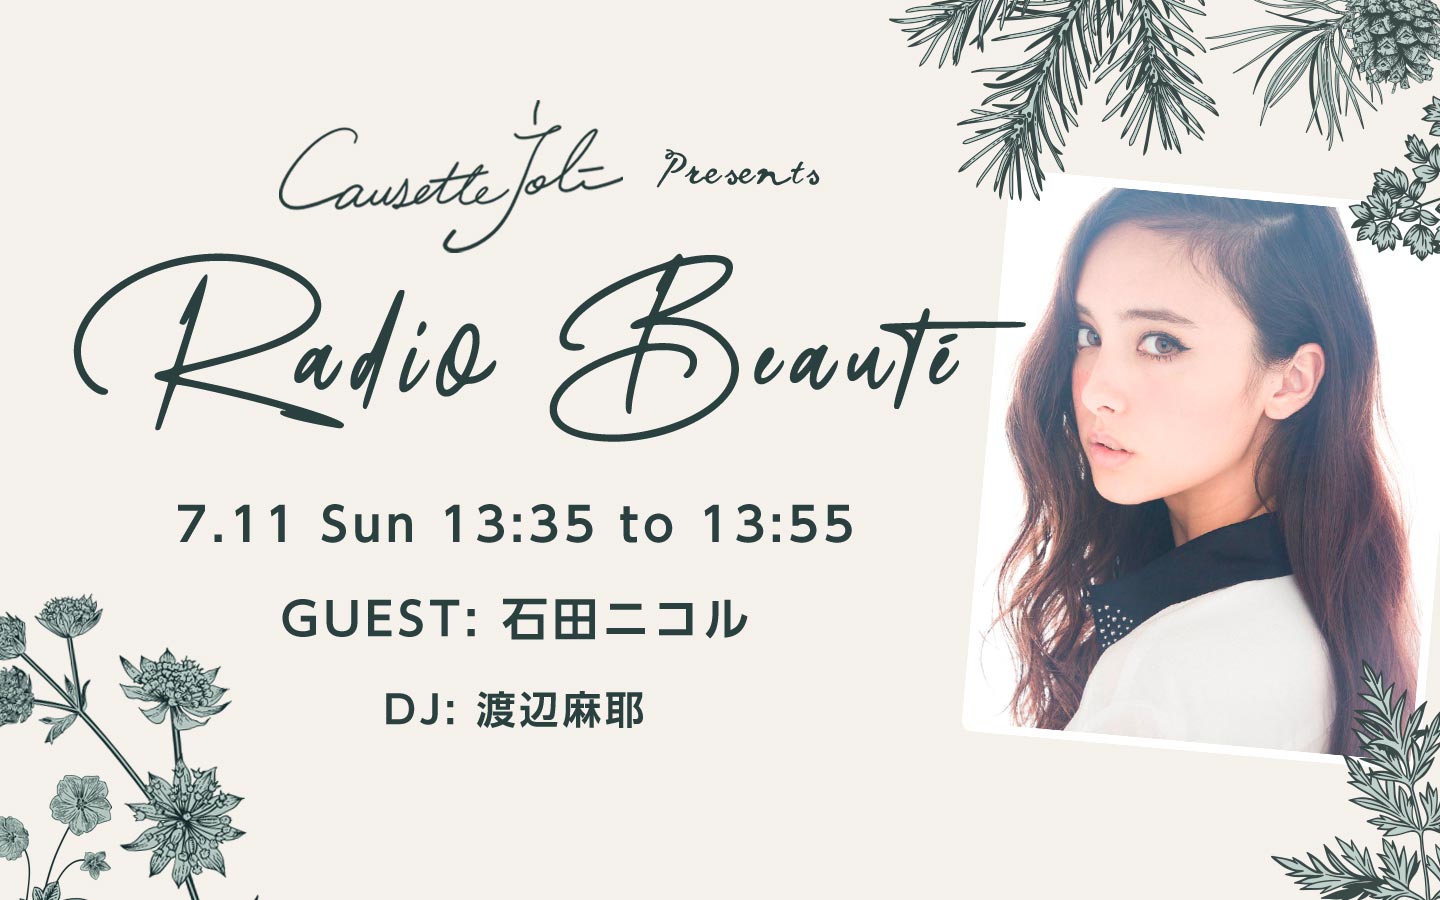 Causette Joli Presents Radio Beaute ゲスト 石田ニコル インターfm7 7mhz Tokyo